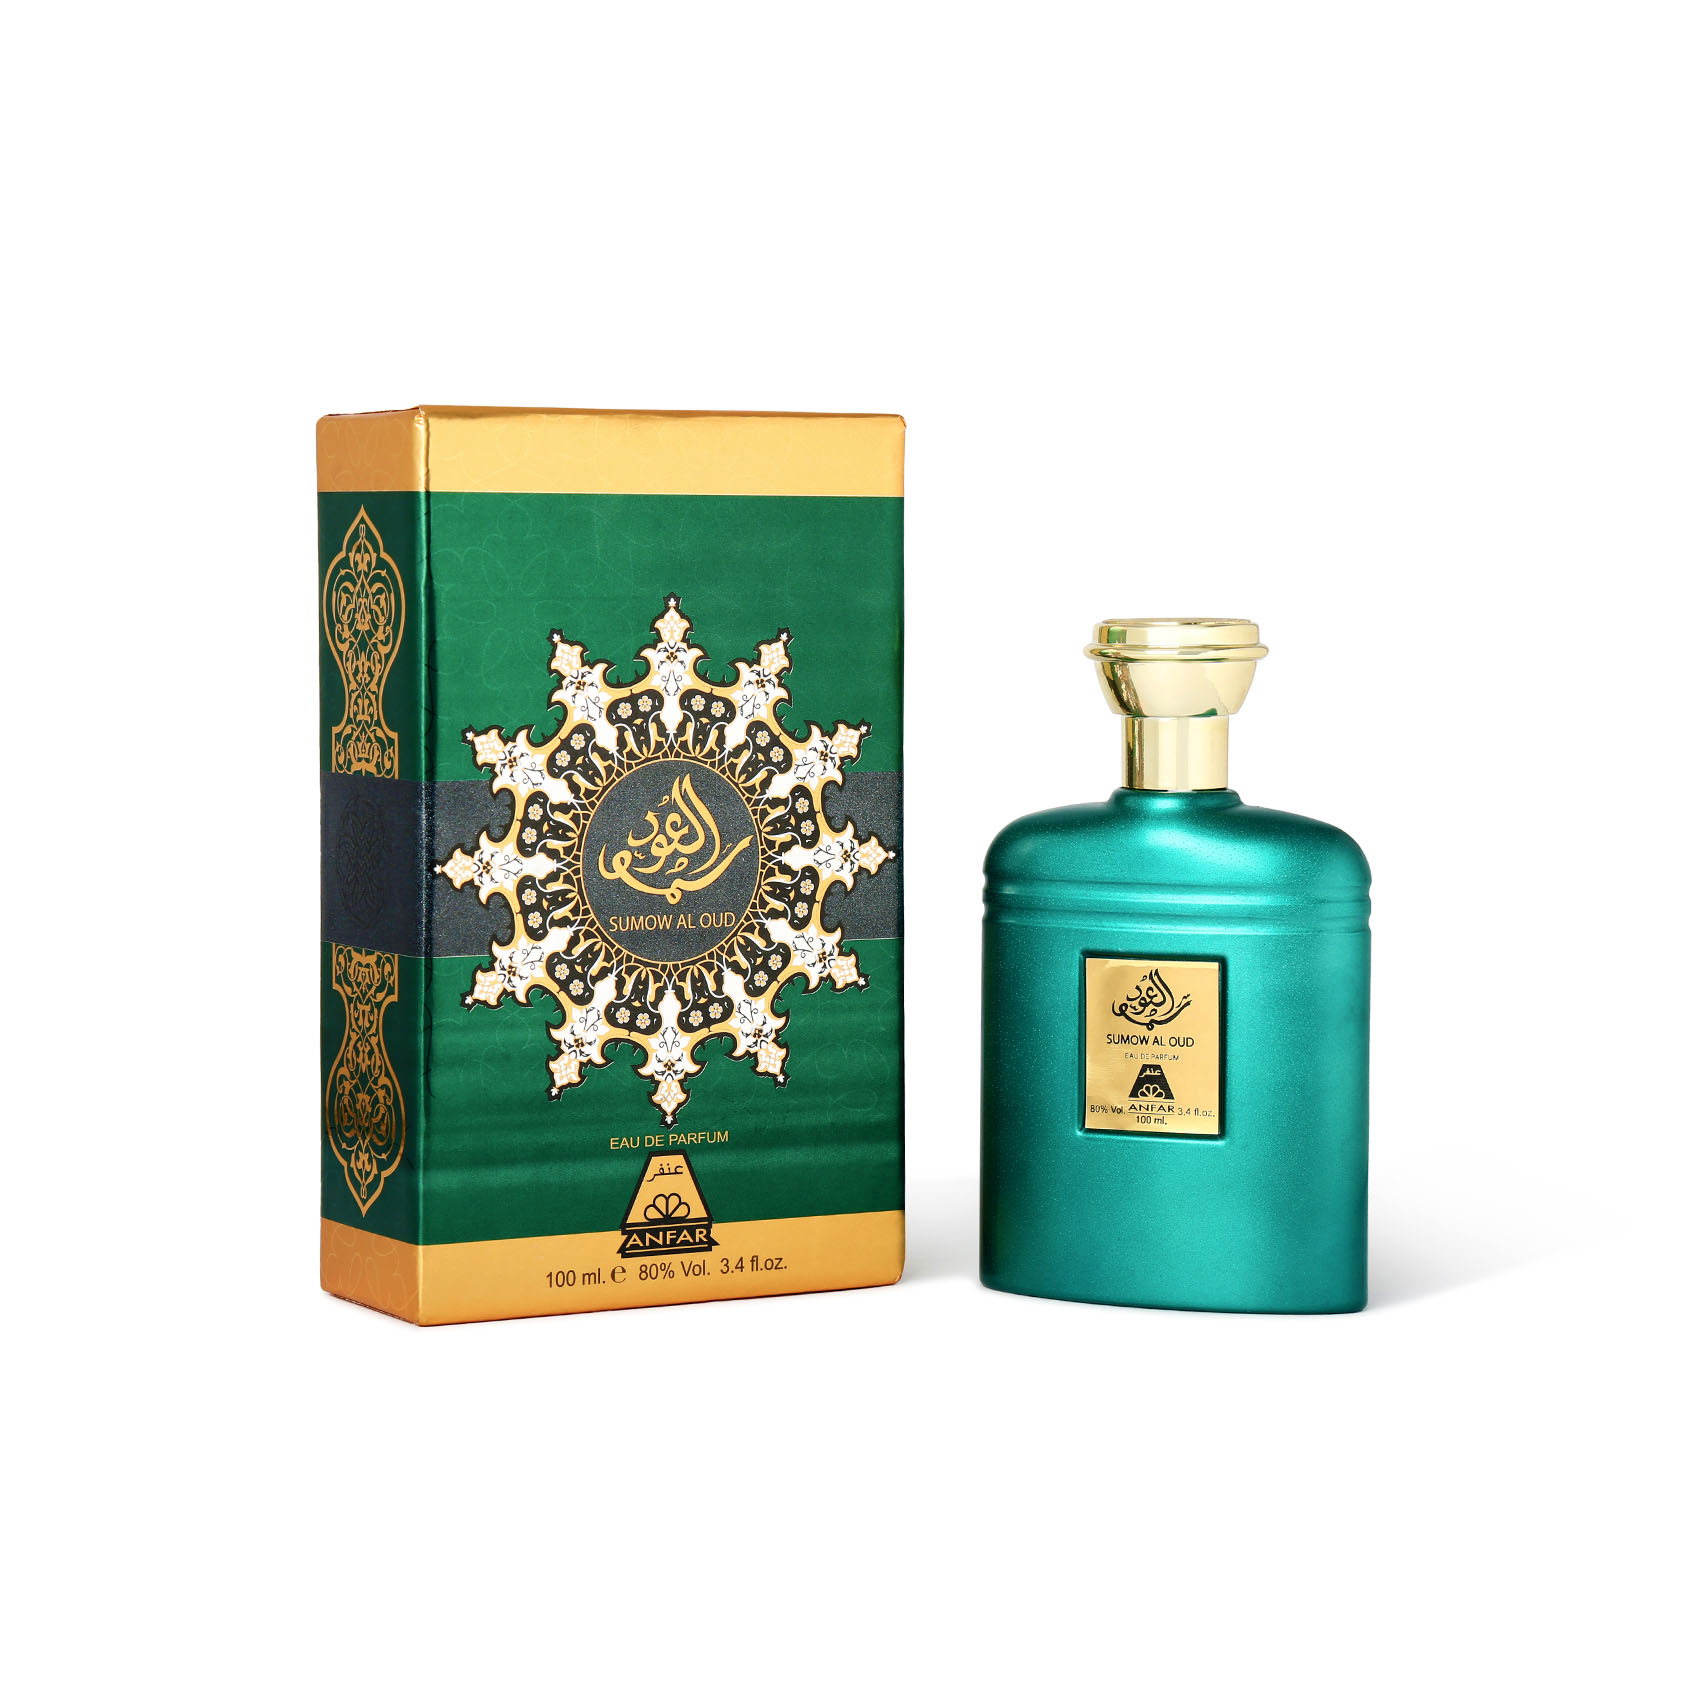 Sumow Al Oud Edp 100 ml Perfume For Men & Women By Anfar